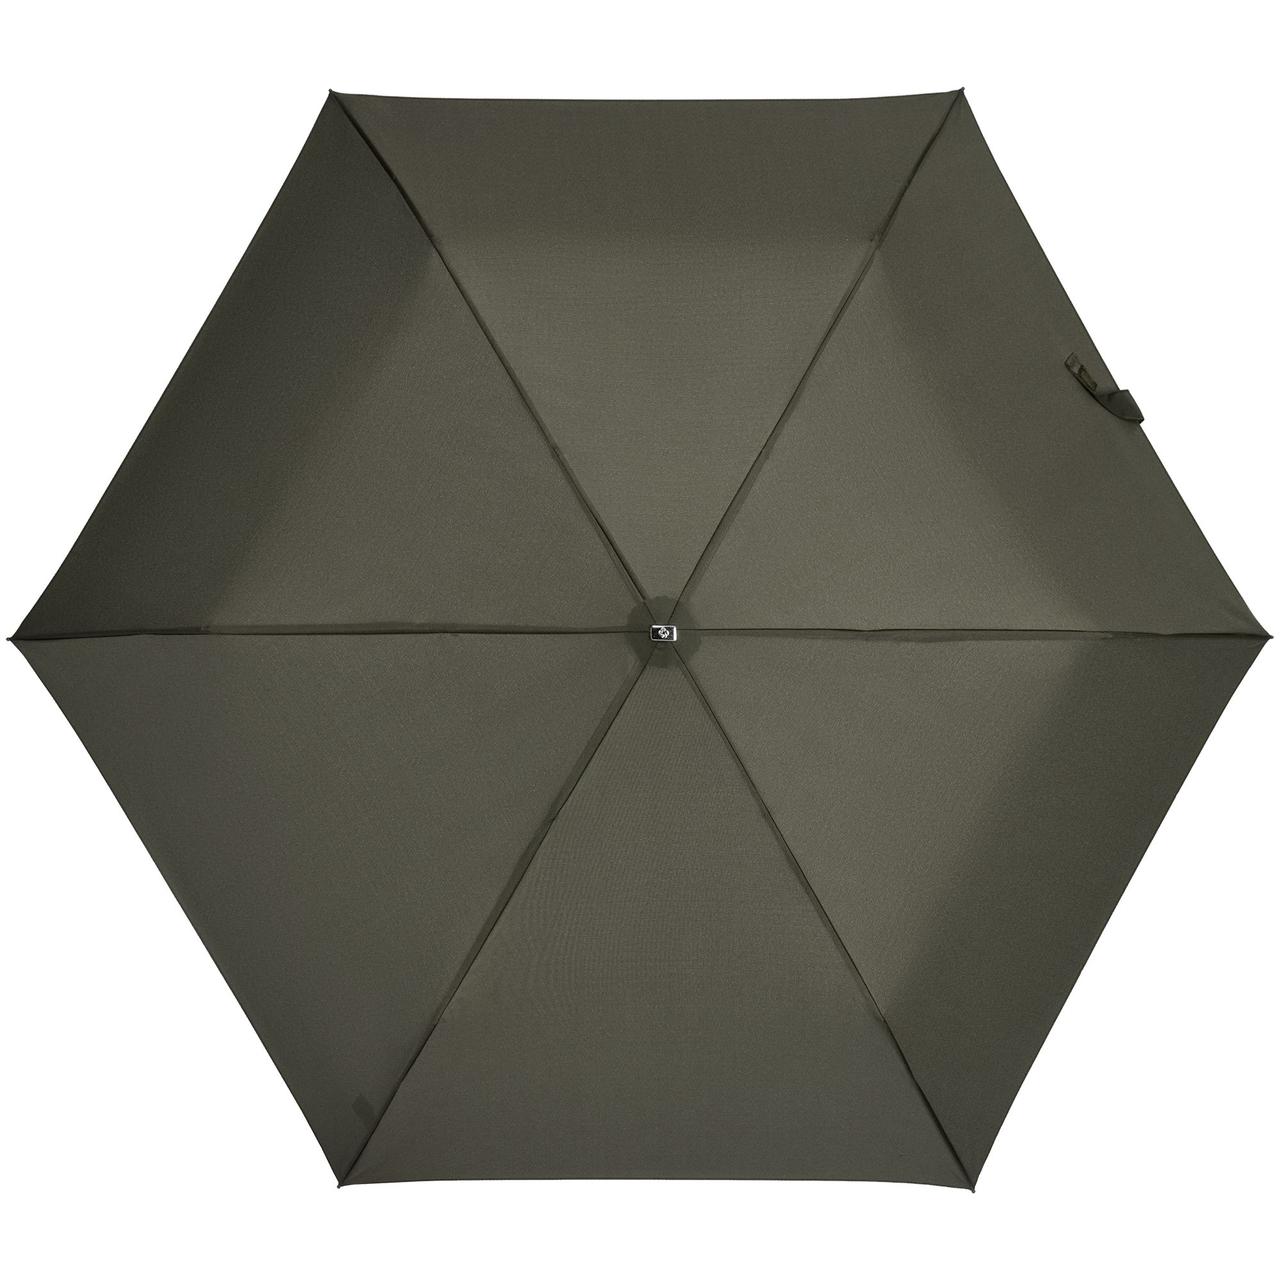 Зонт складной Rain Pro Mini Flat, зеленый (оливковый) (артикул 97U-24403)